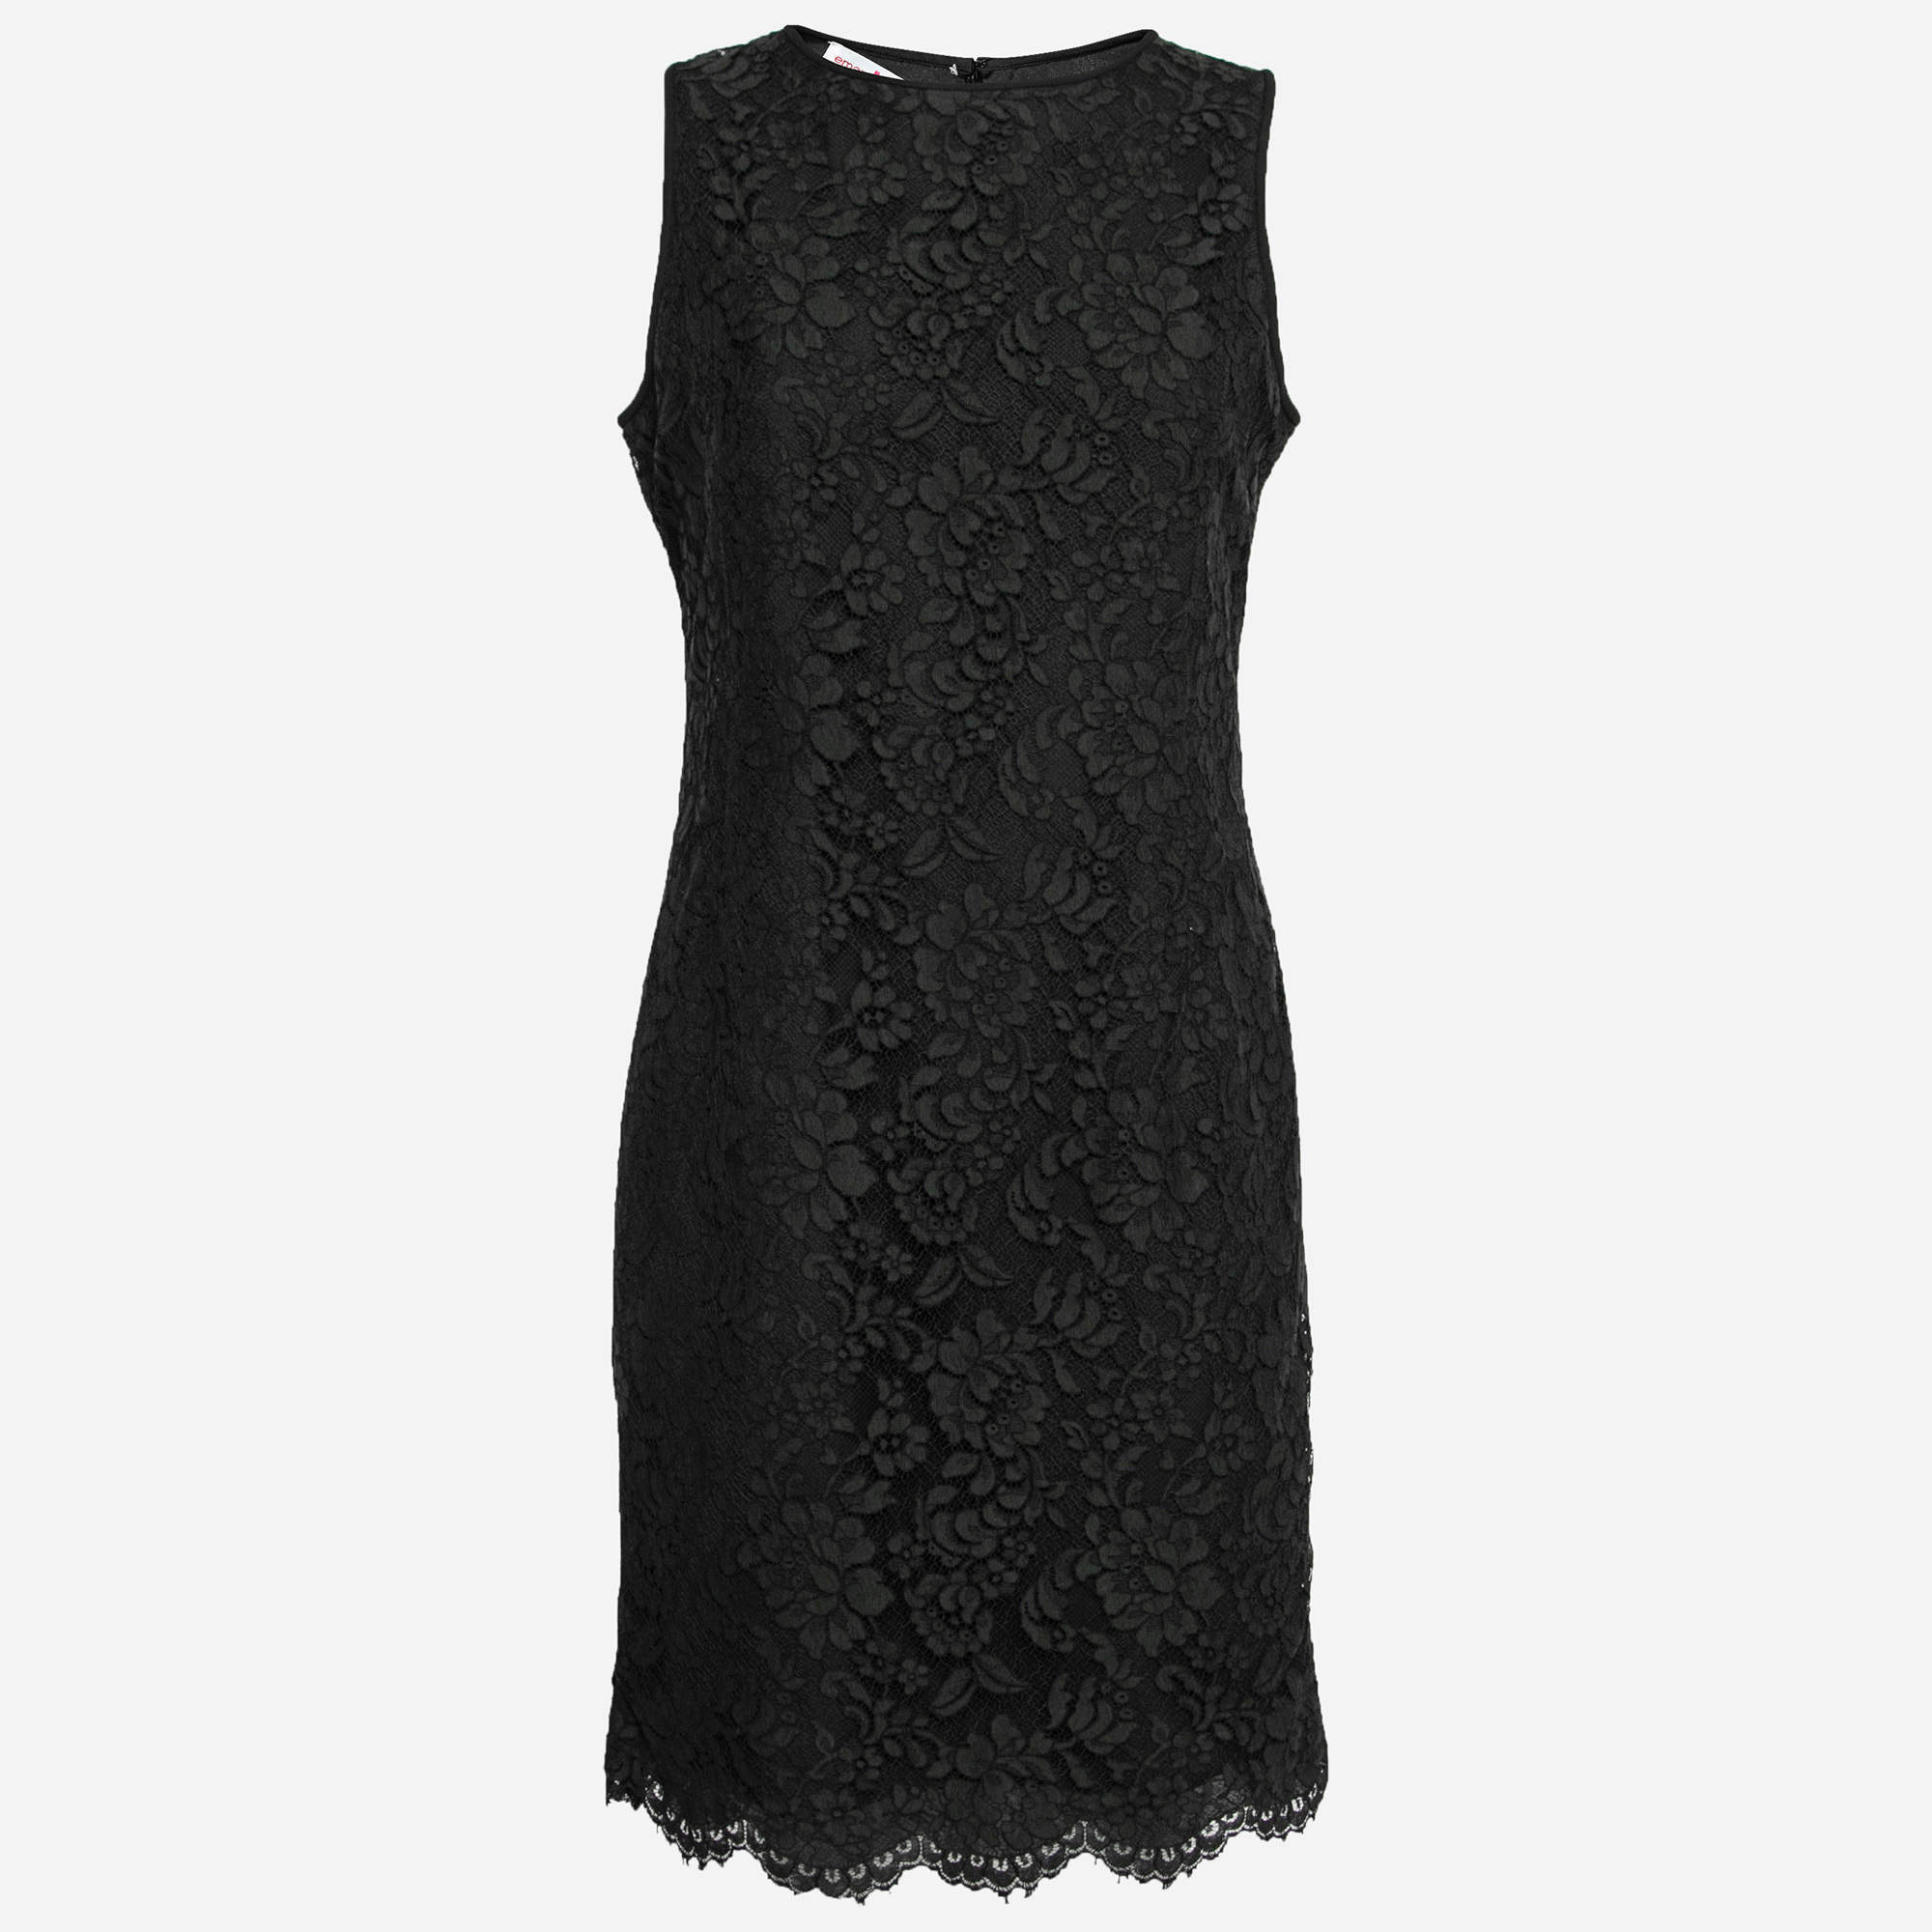 Emanuel Ungaro Collection Black Floral Lace Scalloped Hem Sleeveless Dress L